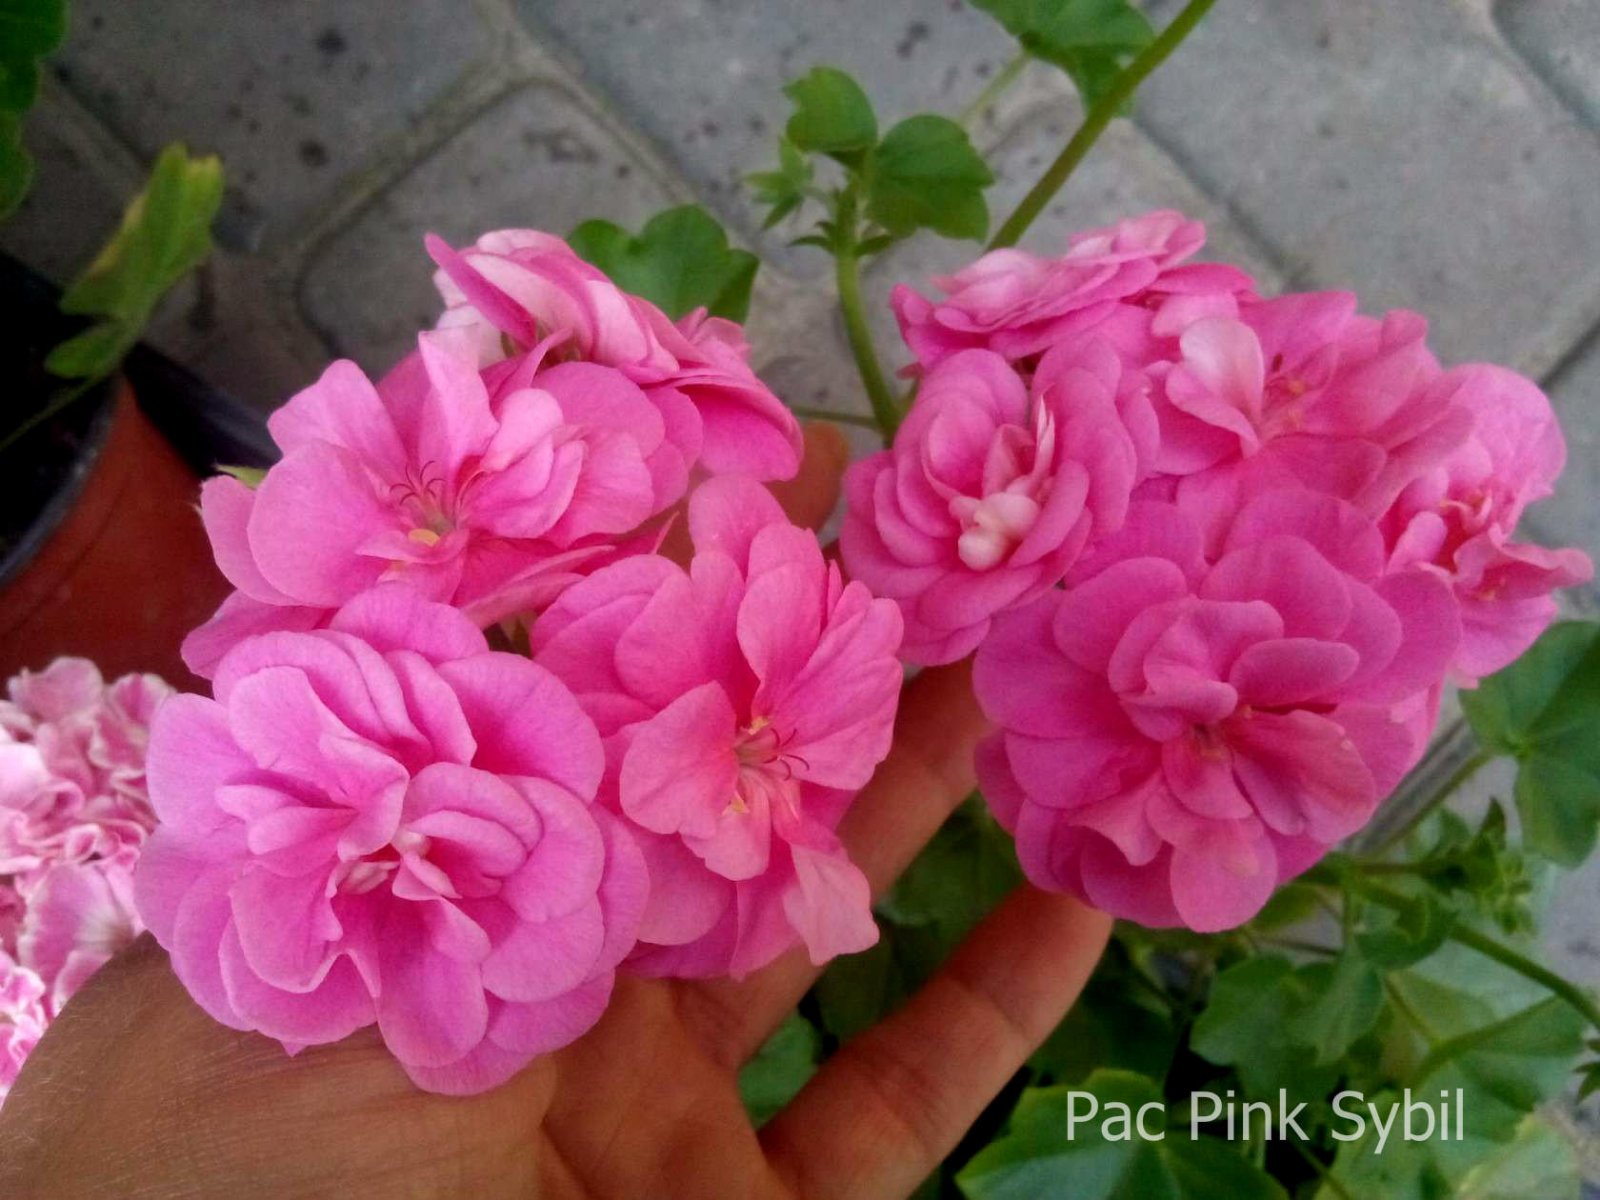 Pac pink sybil пеларгония фото